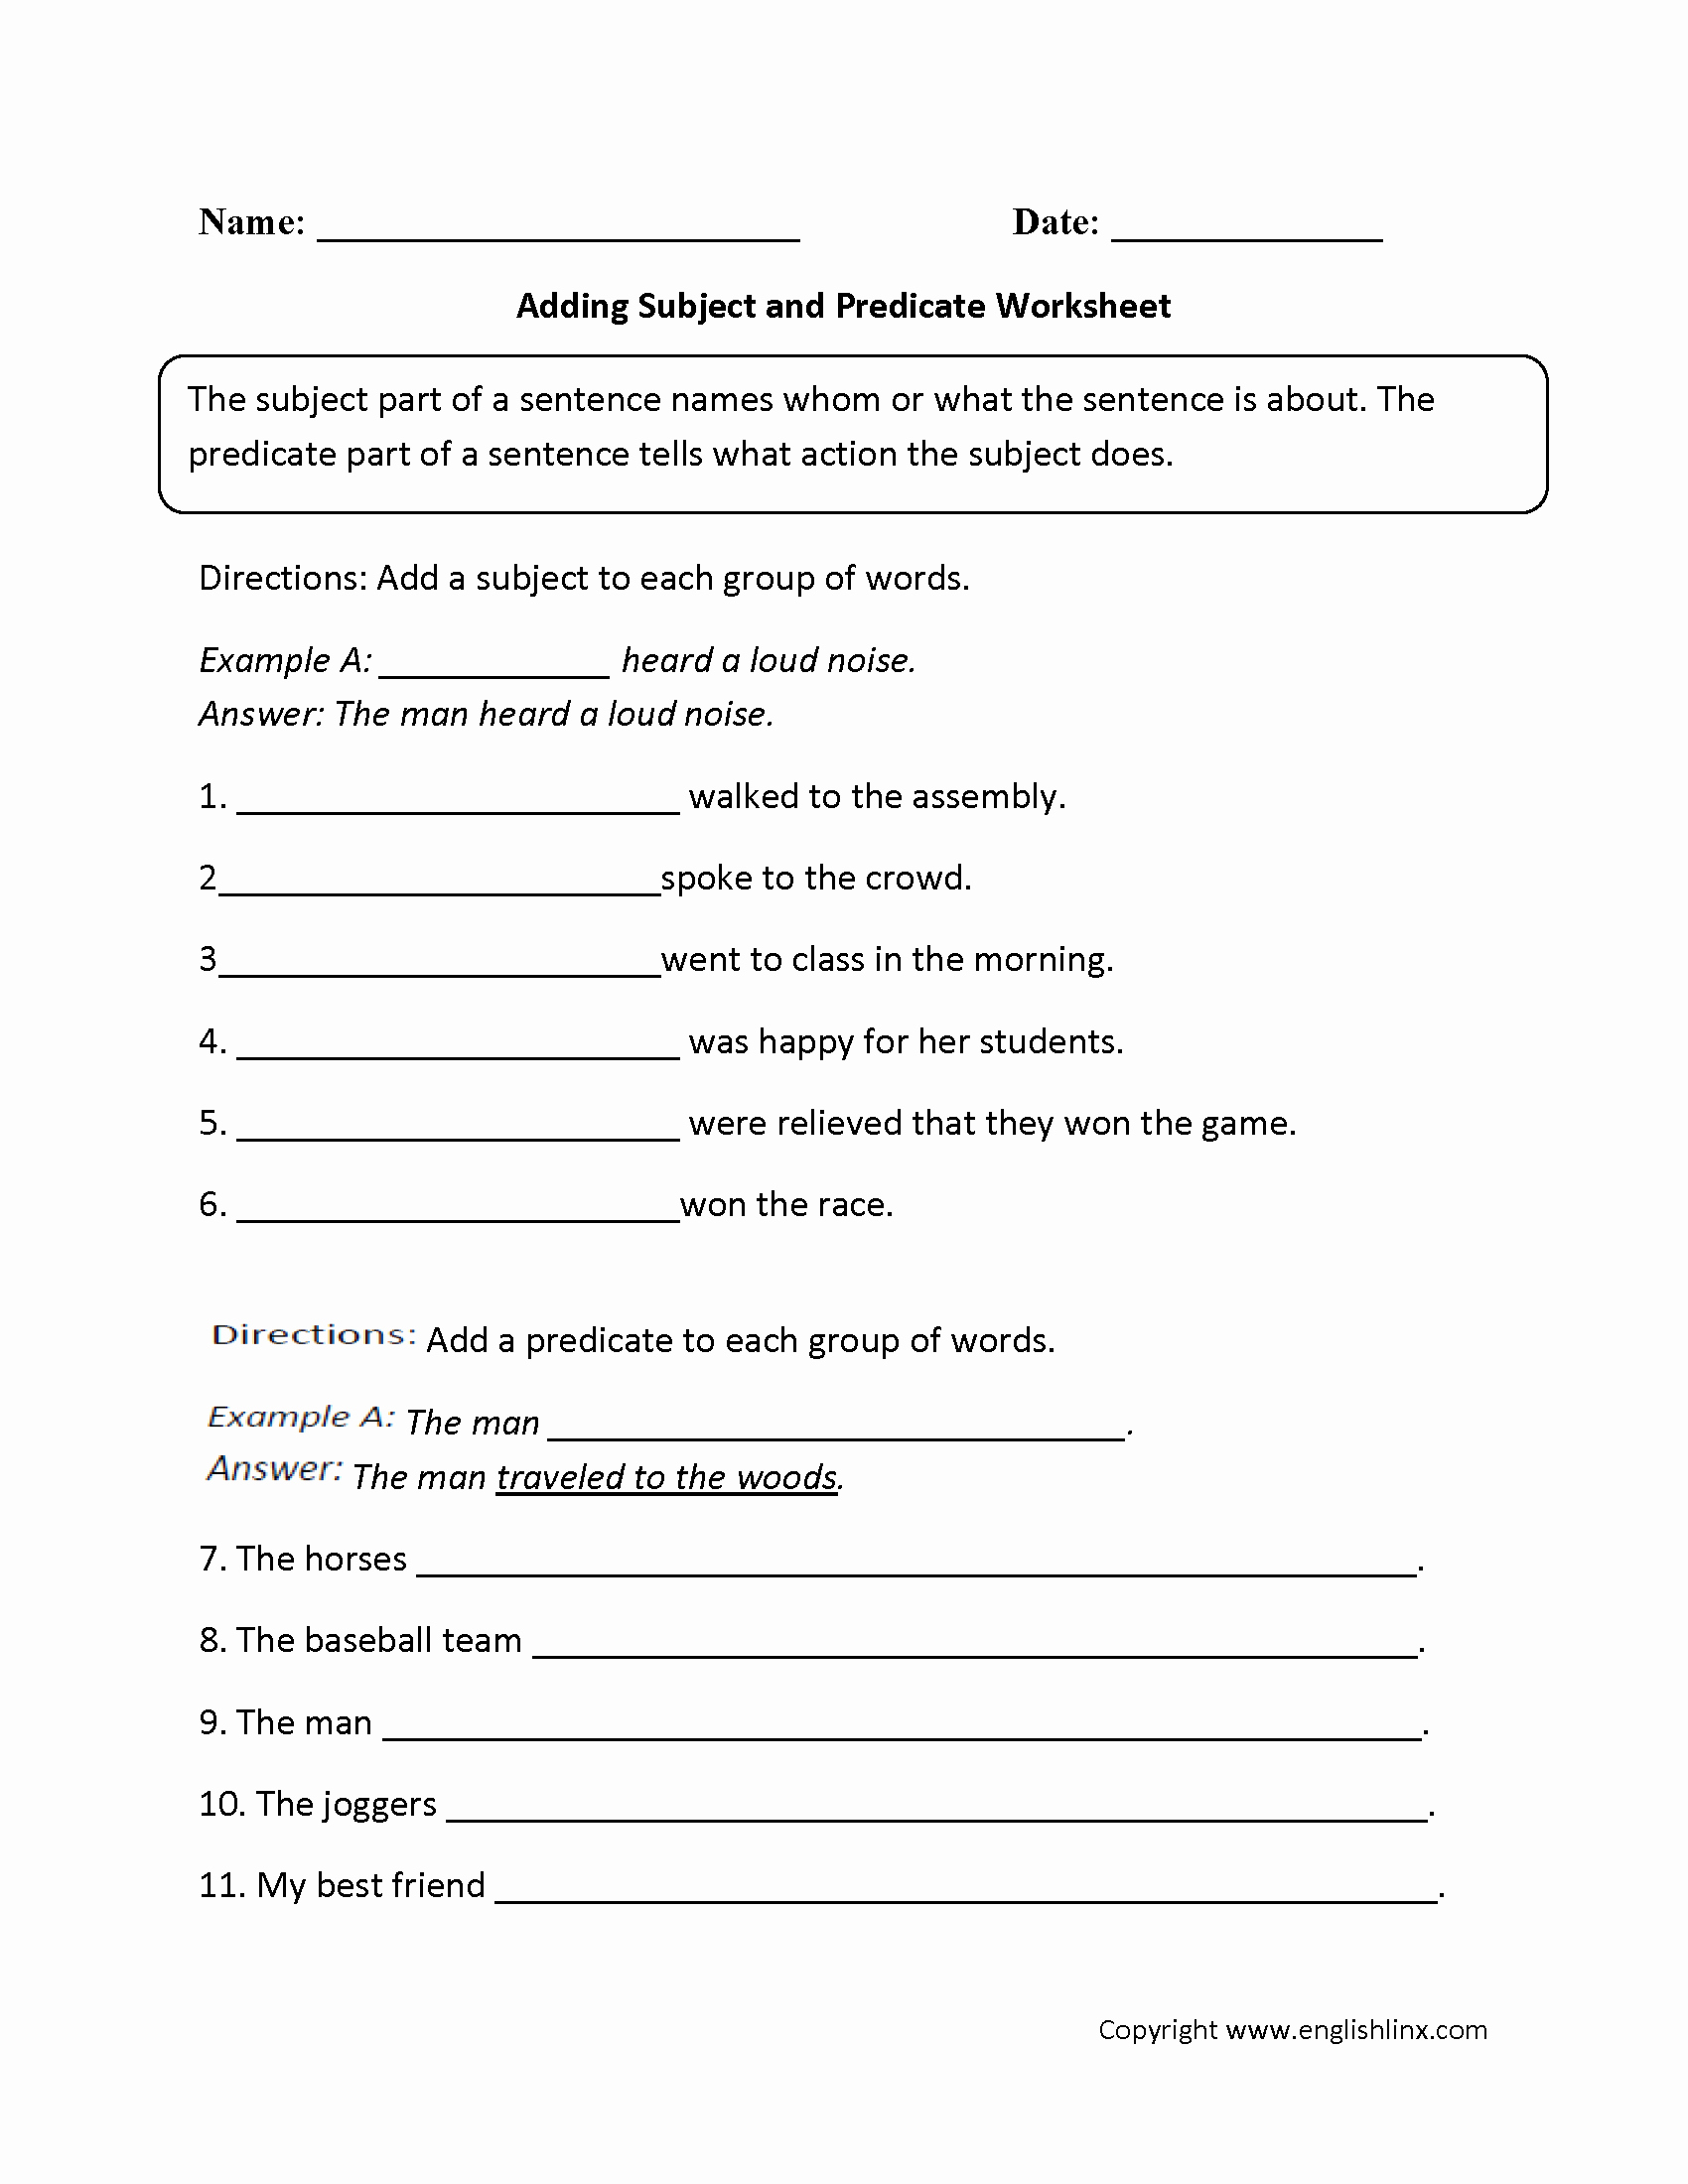 Free Subject and Predicate Worksheets New Plete Predicates Worksheet